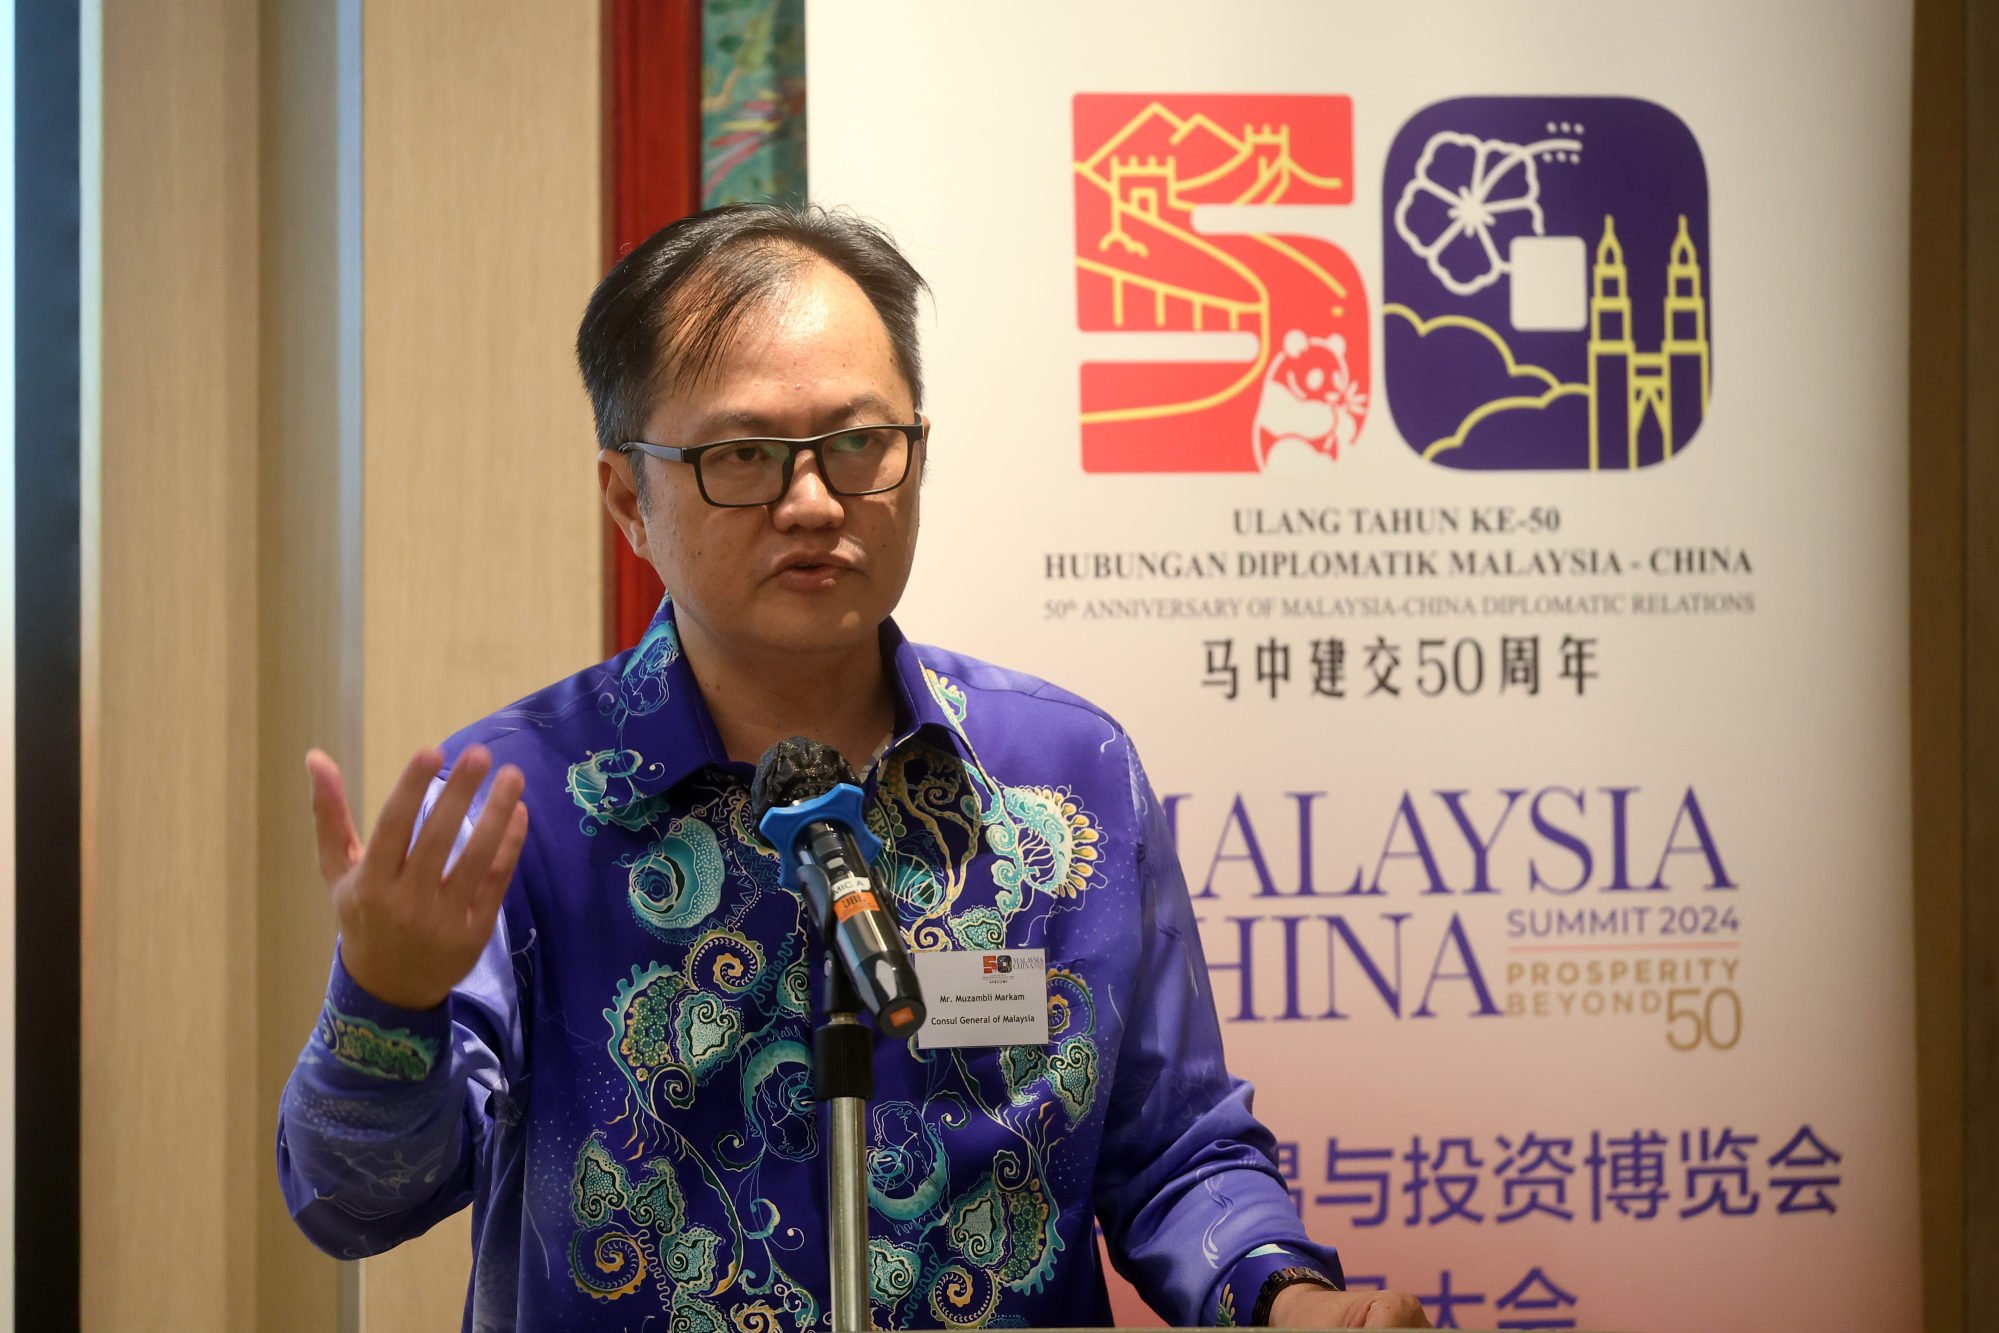 Hong Kong companies hail Malaysia as ‘go-to place’ for AI, e-commerce development